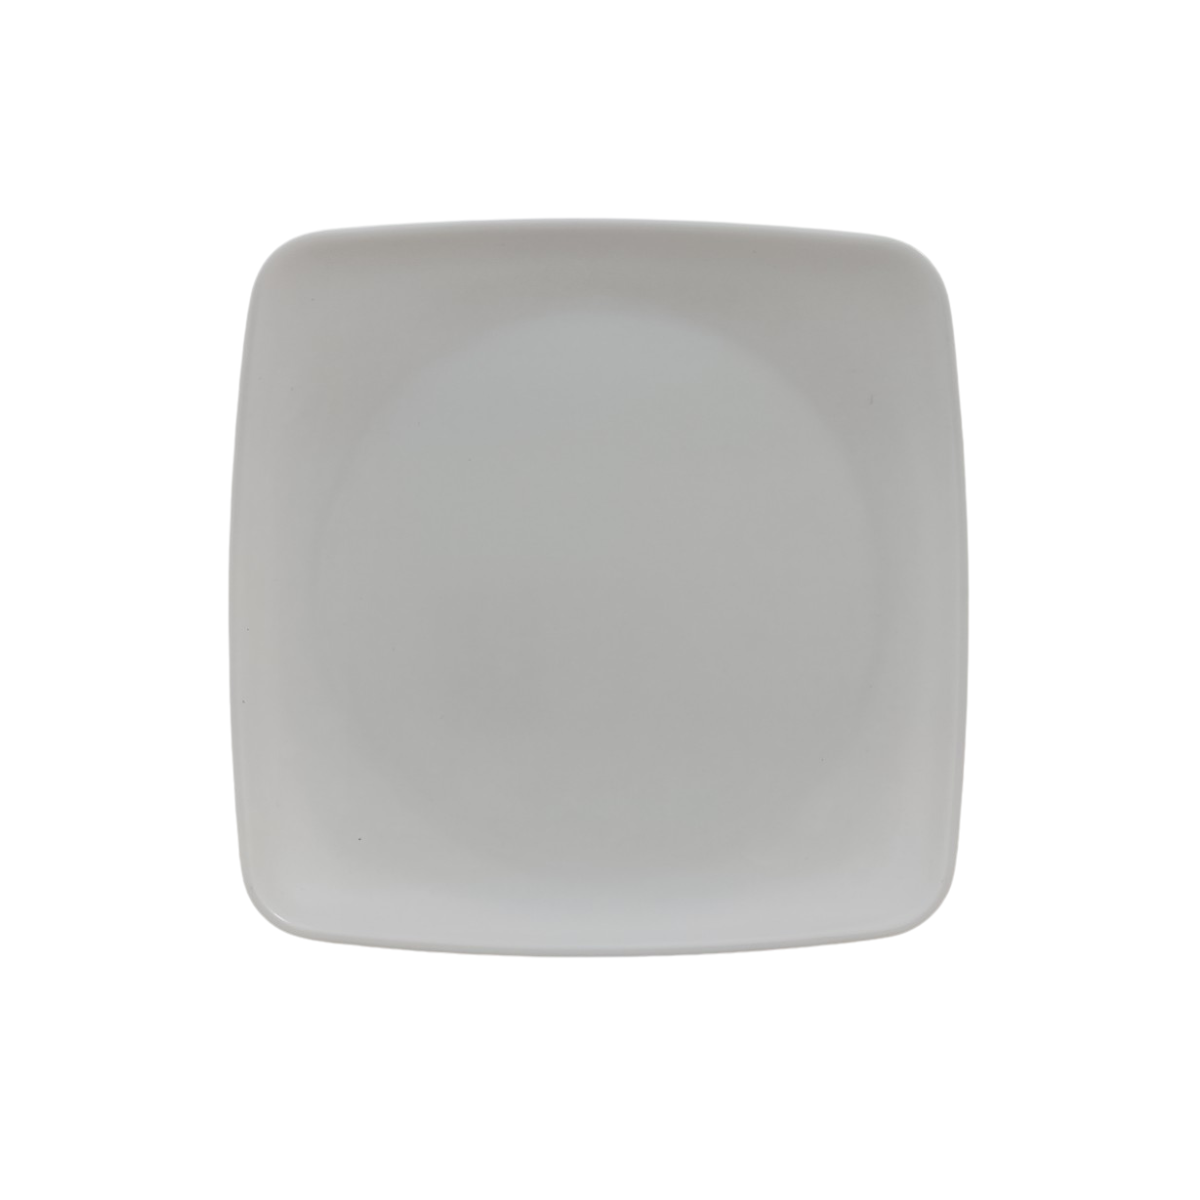 Plato de melamina para ensalada 22 cm aprox. color blanco H86075 - ANFORAMA (Todo para mi Cocina)